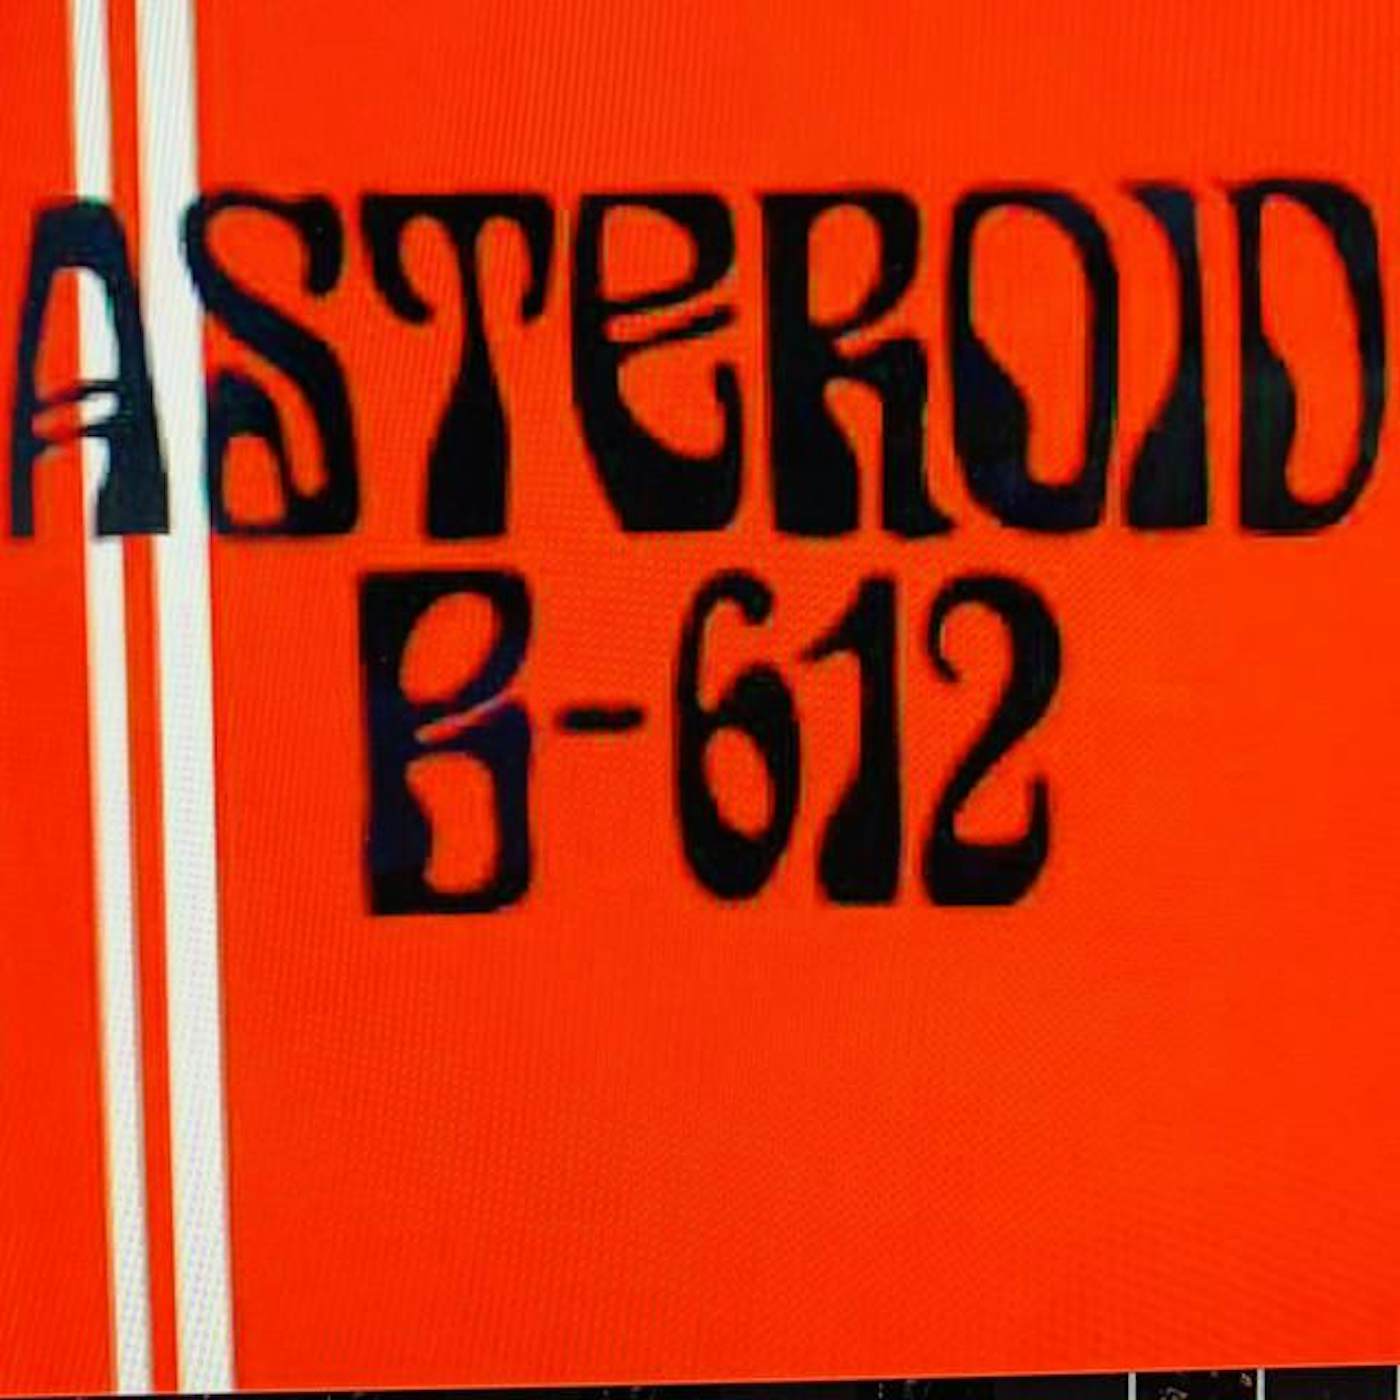 Asteroid B-612